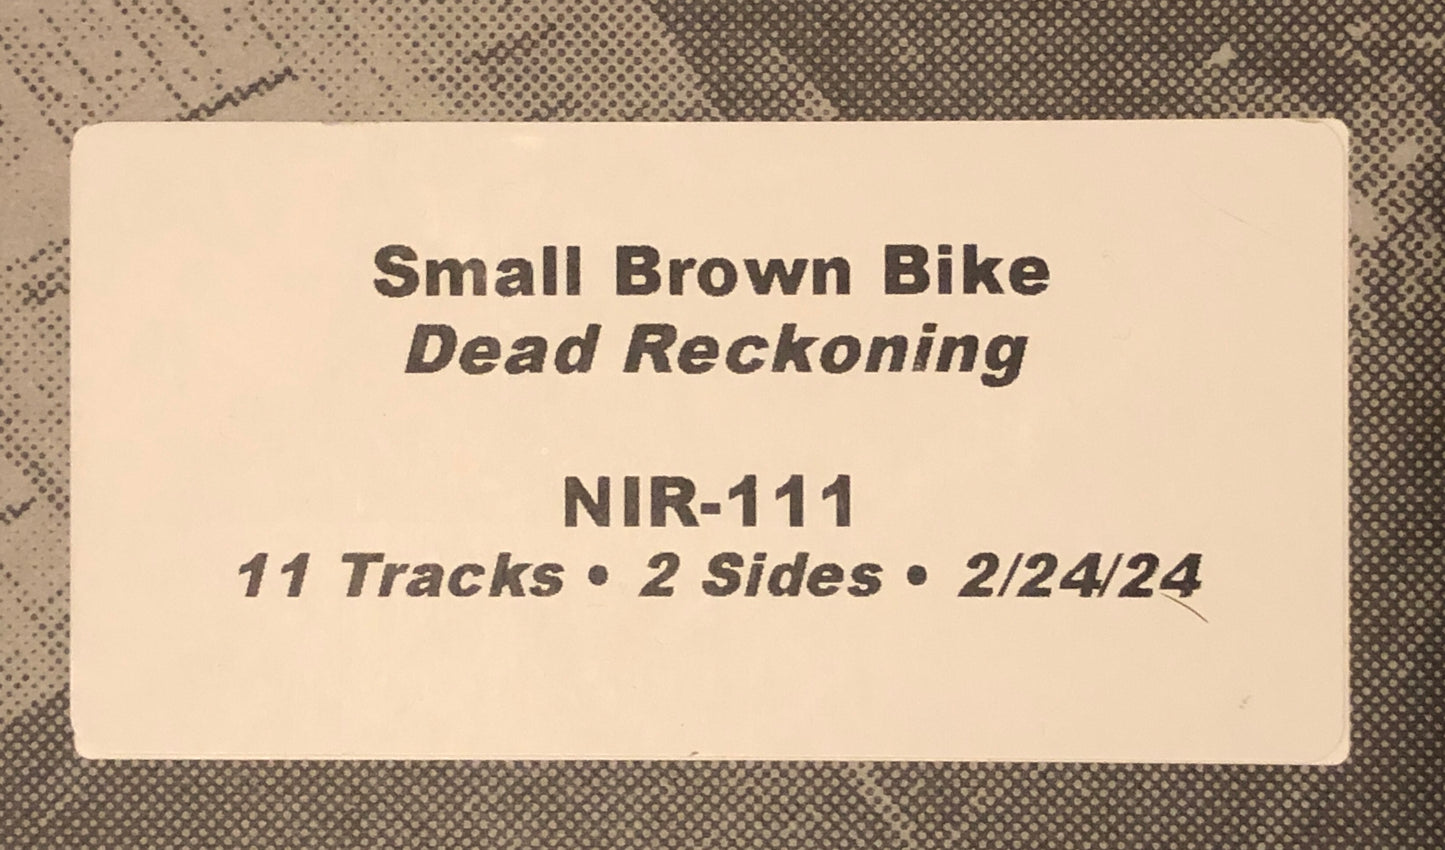 SMALL BROWN BIKE "Dead Reckoning" TEST PRESSING